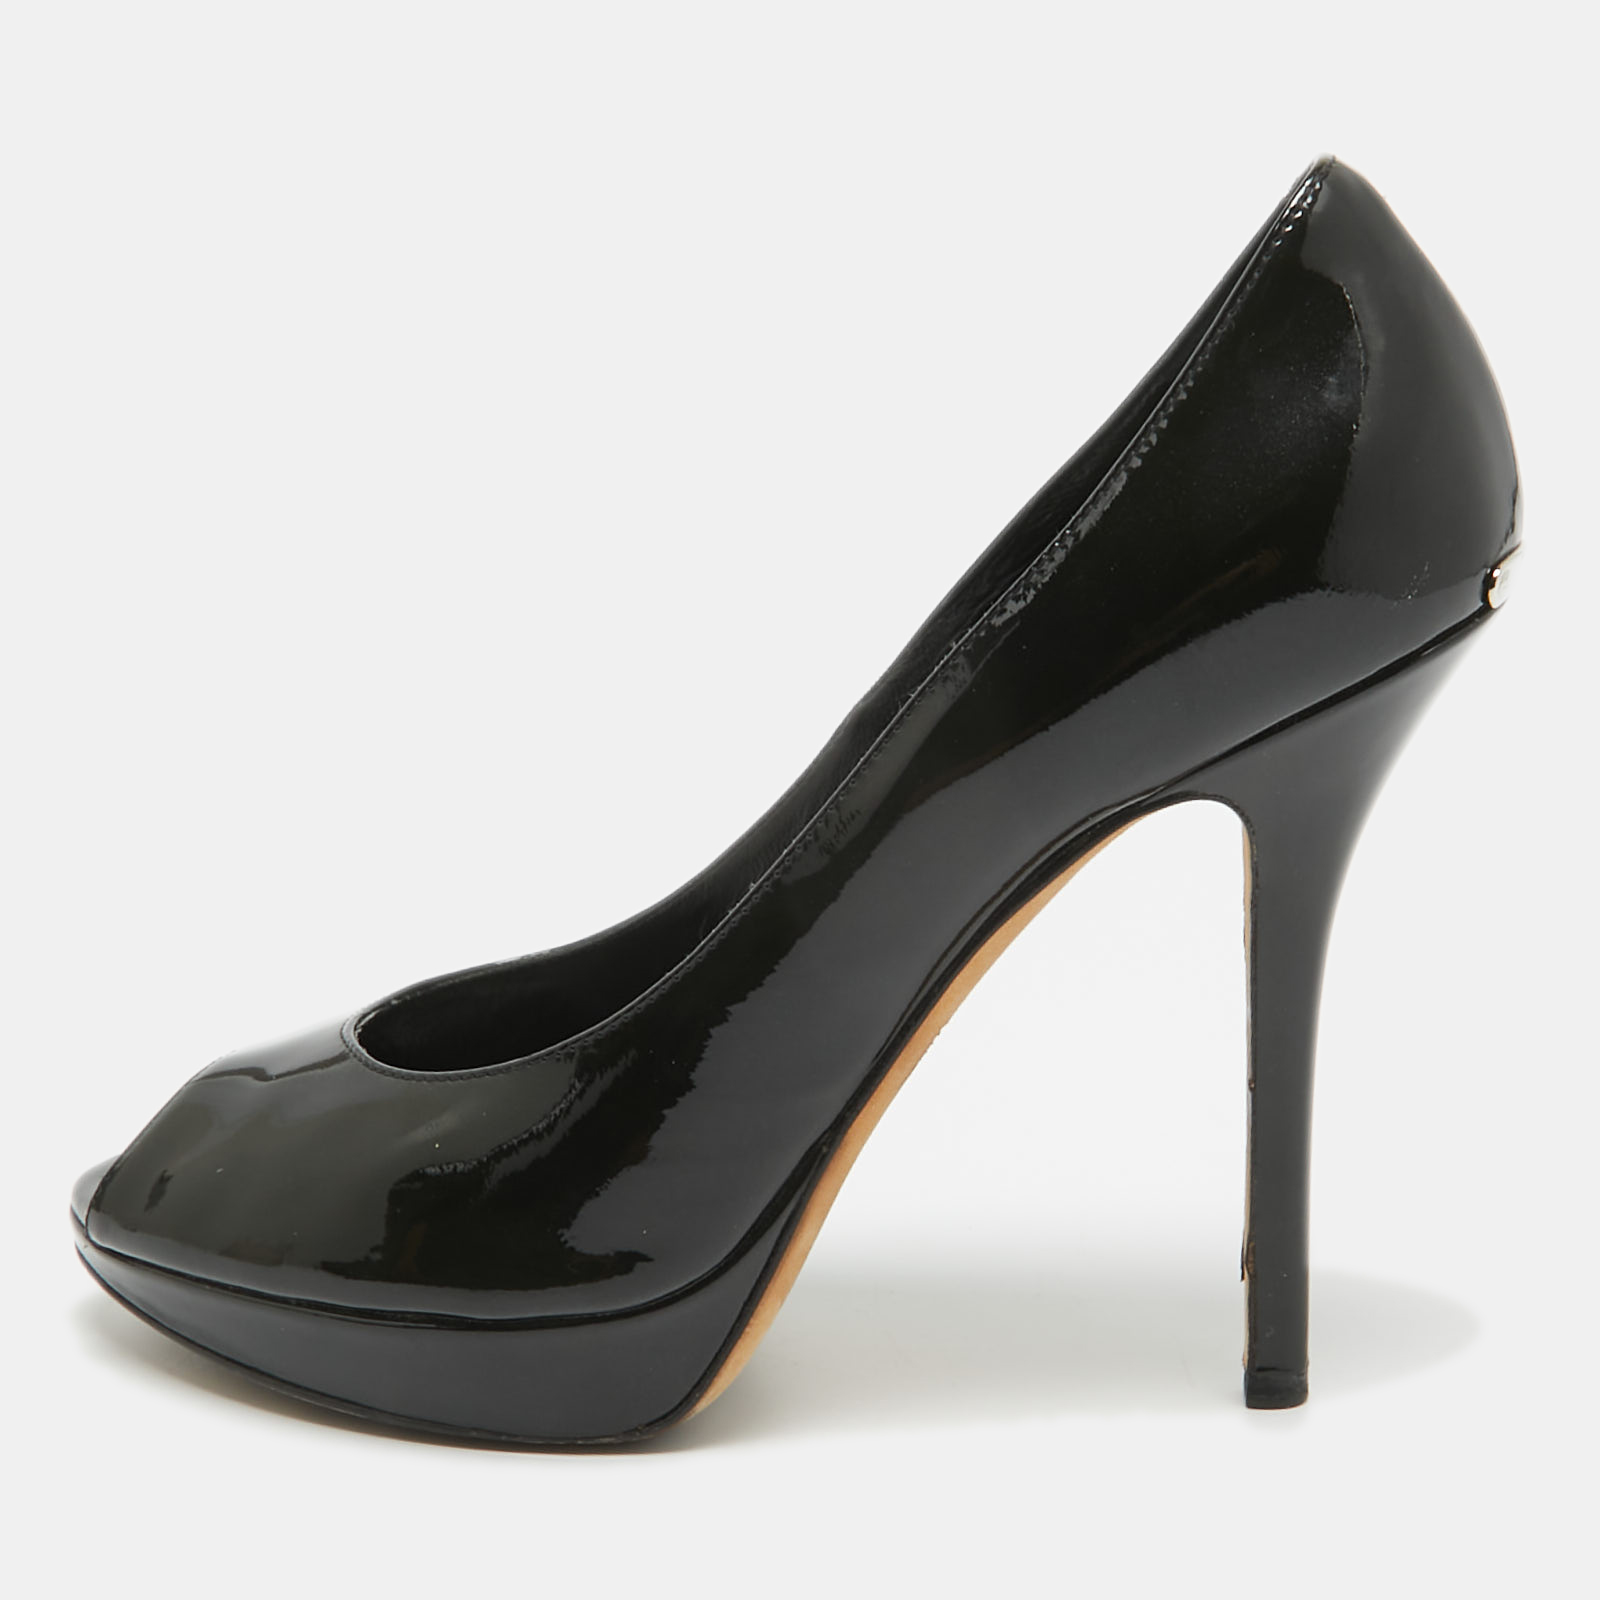 Dior black patent leather miss dior peep toe pumps size 38